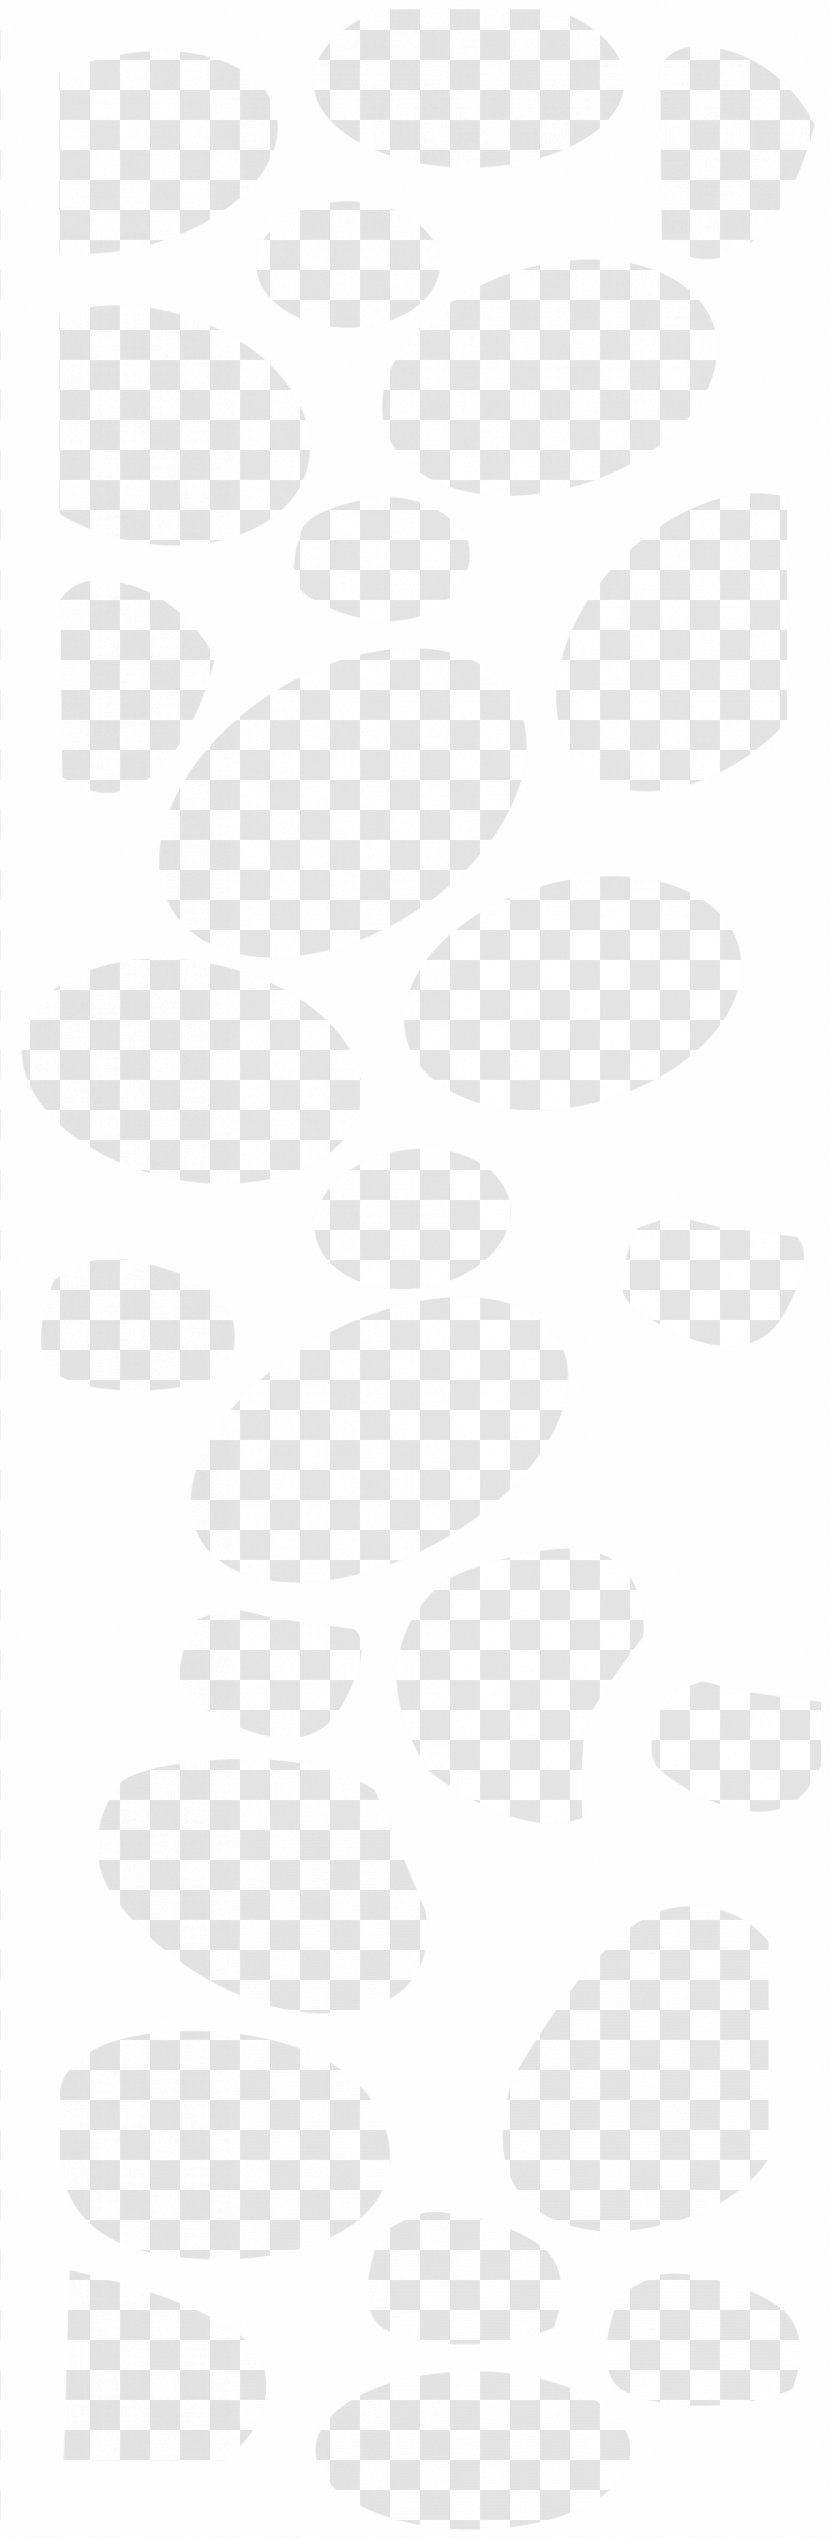 White Black Area Pattern - Decoration Hollow Shift Gate Transparent PNG